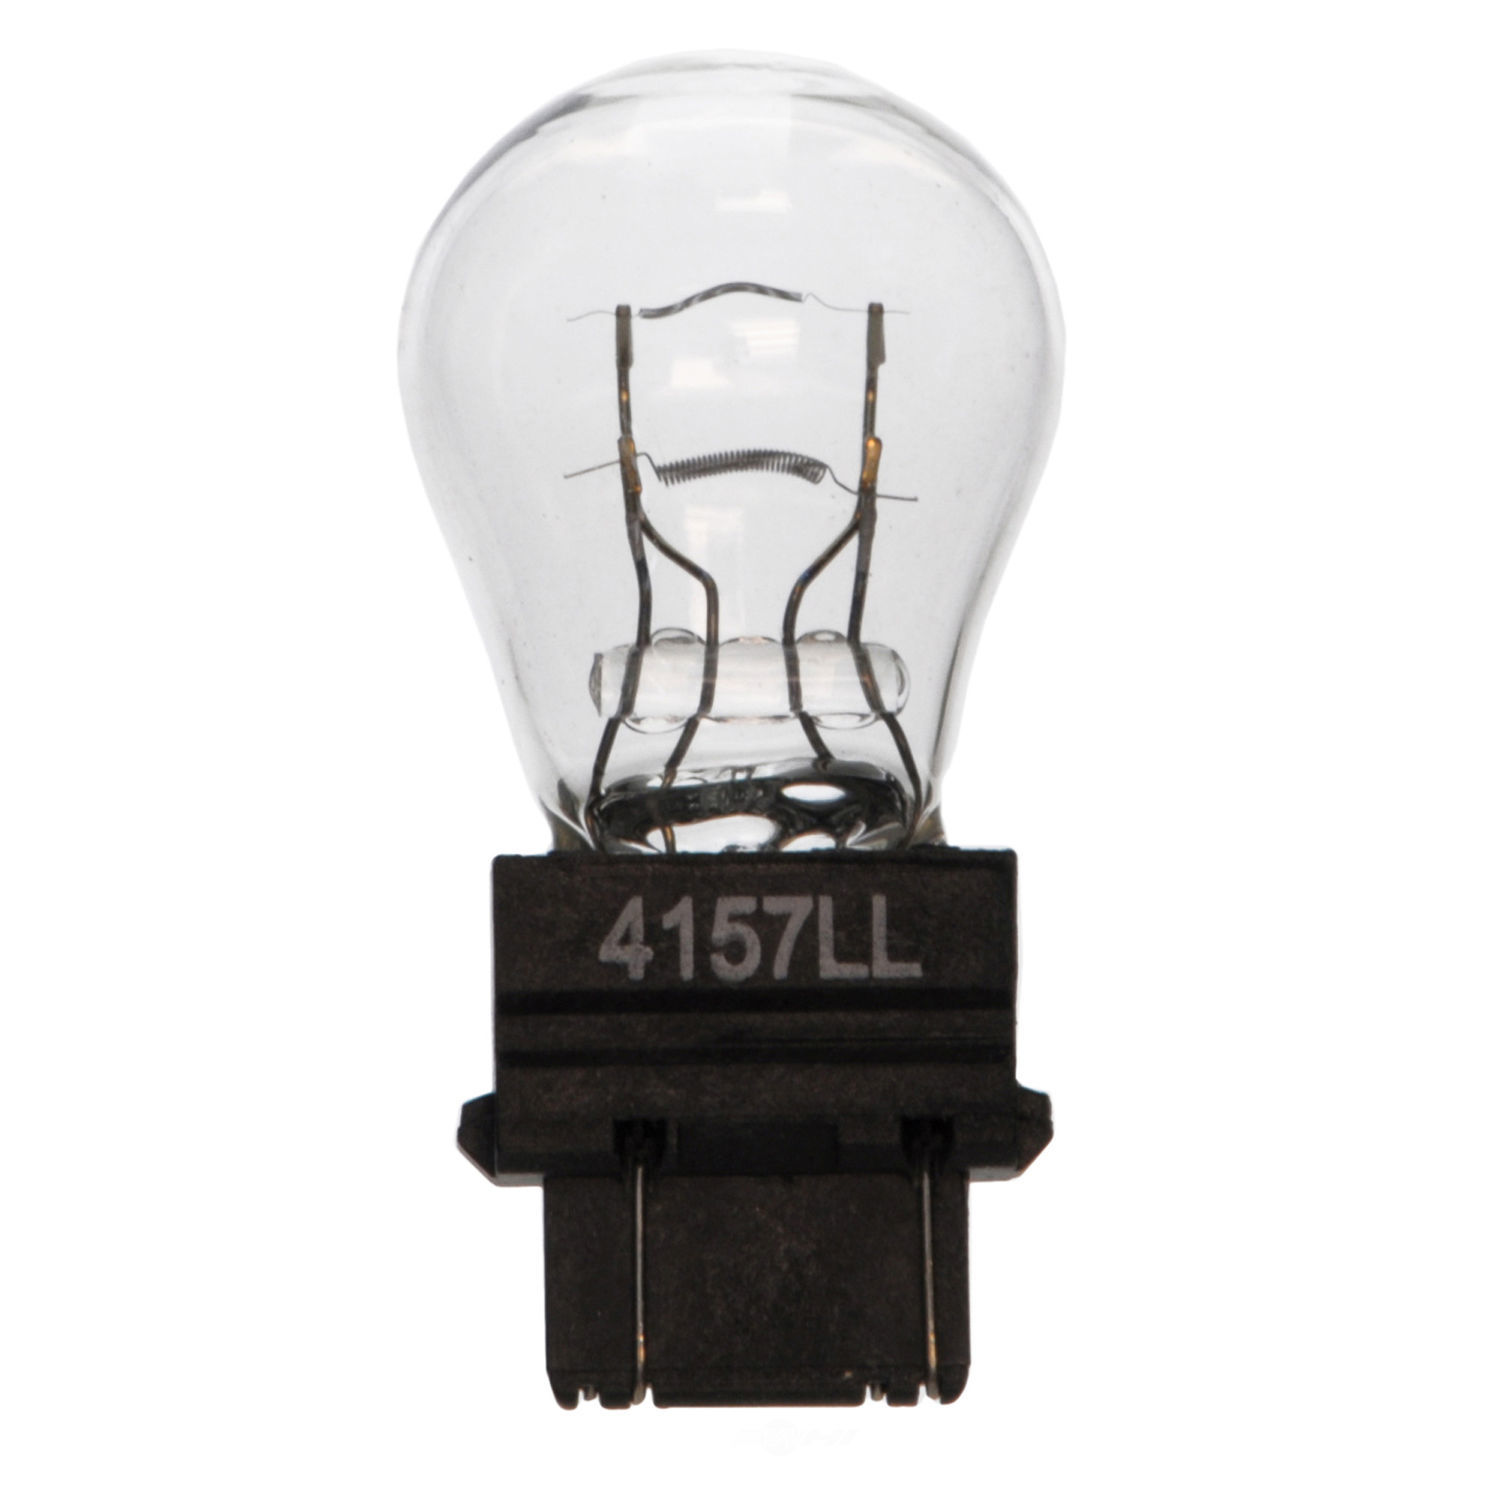 WAGNER LIGHTING - Long Life Miniature Boxed Running Light Bulb - WLP 4157LL